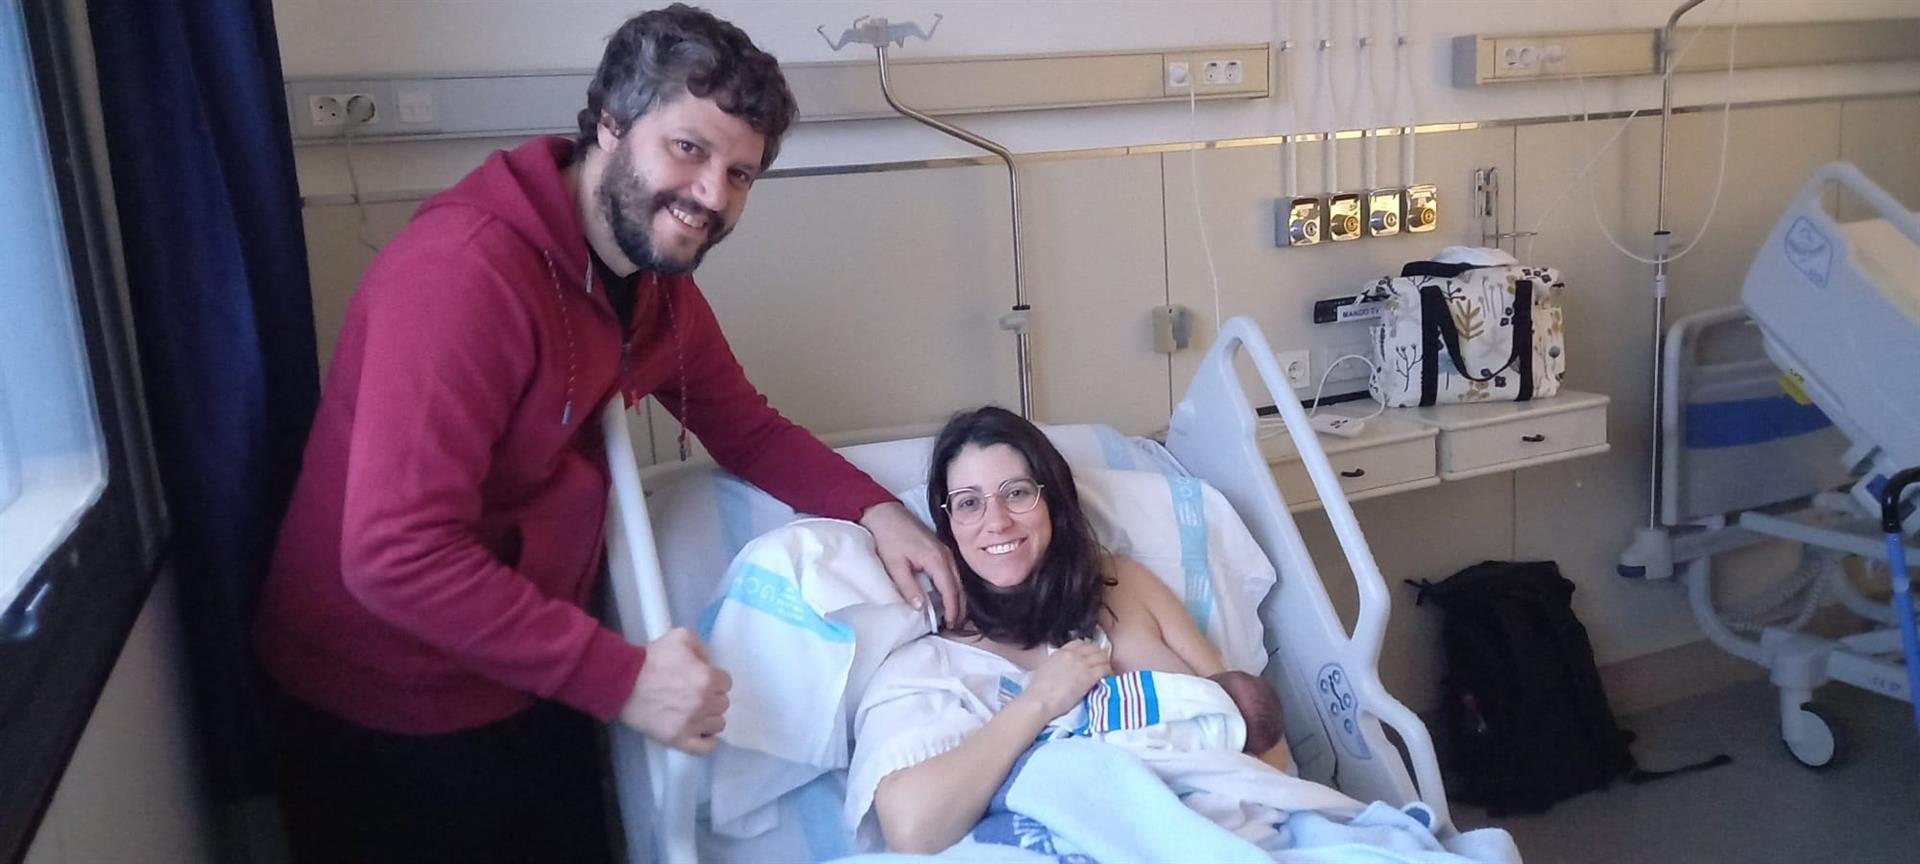 Los padres posan junto al primer bebé de 2024 en Baleares. - IBSALUT